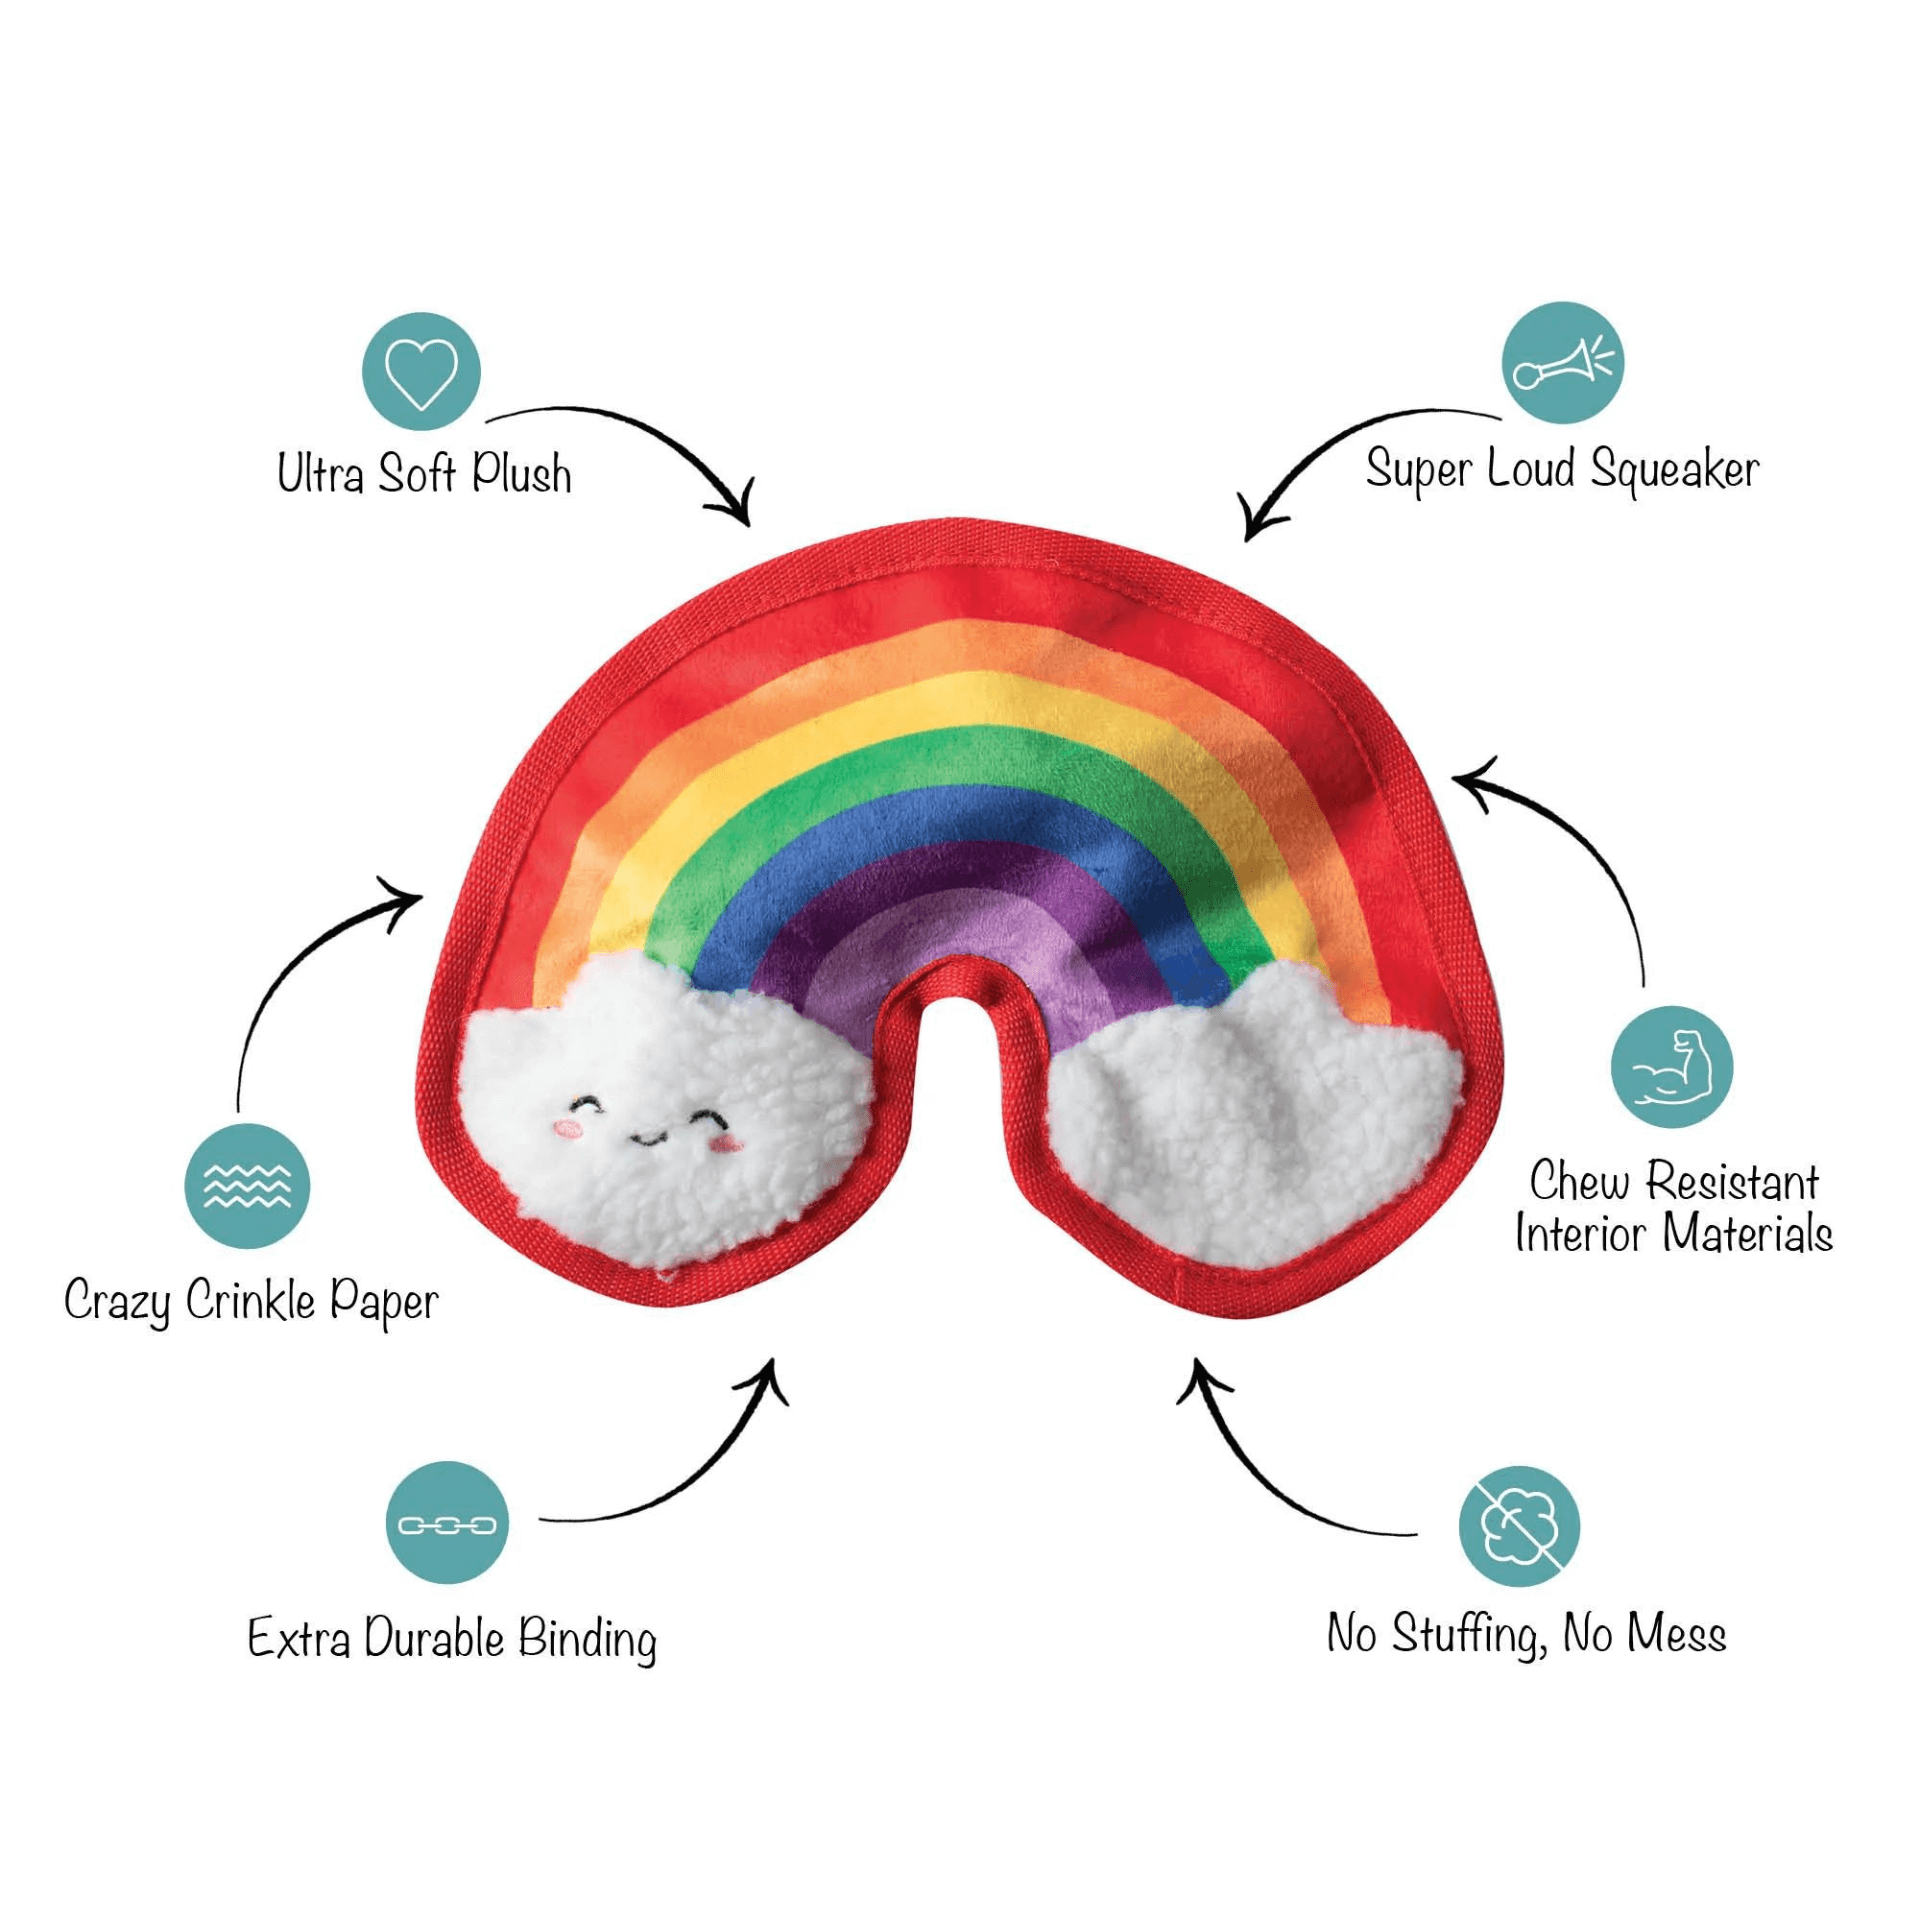 Mardi gras, let's pawty rainbow plush dog toy